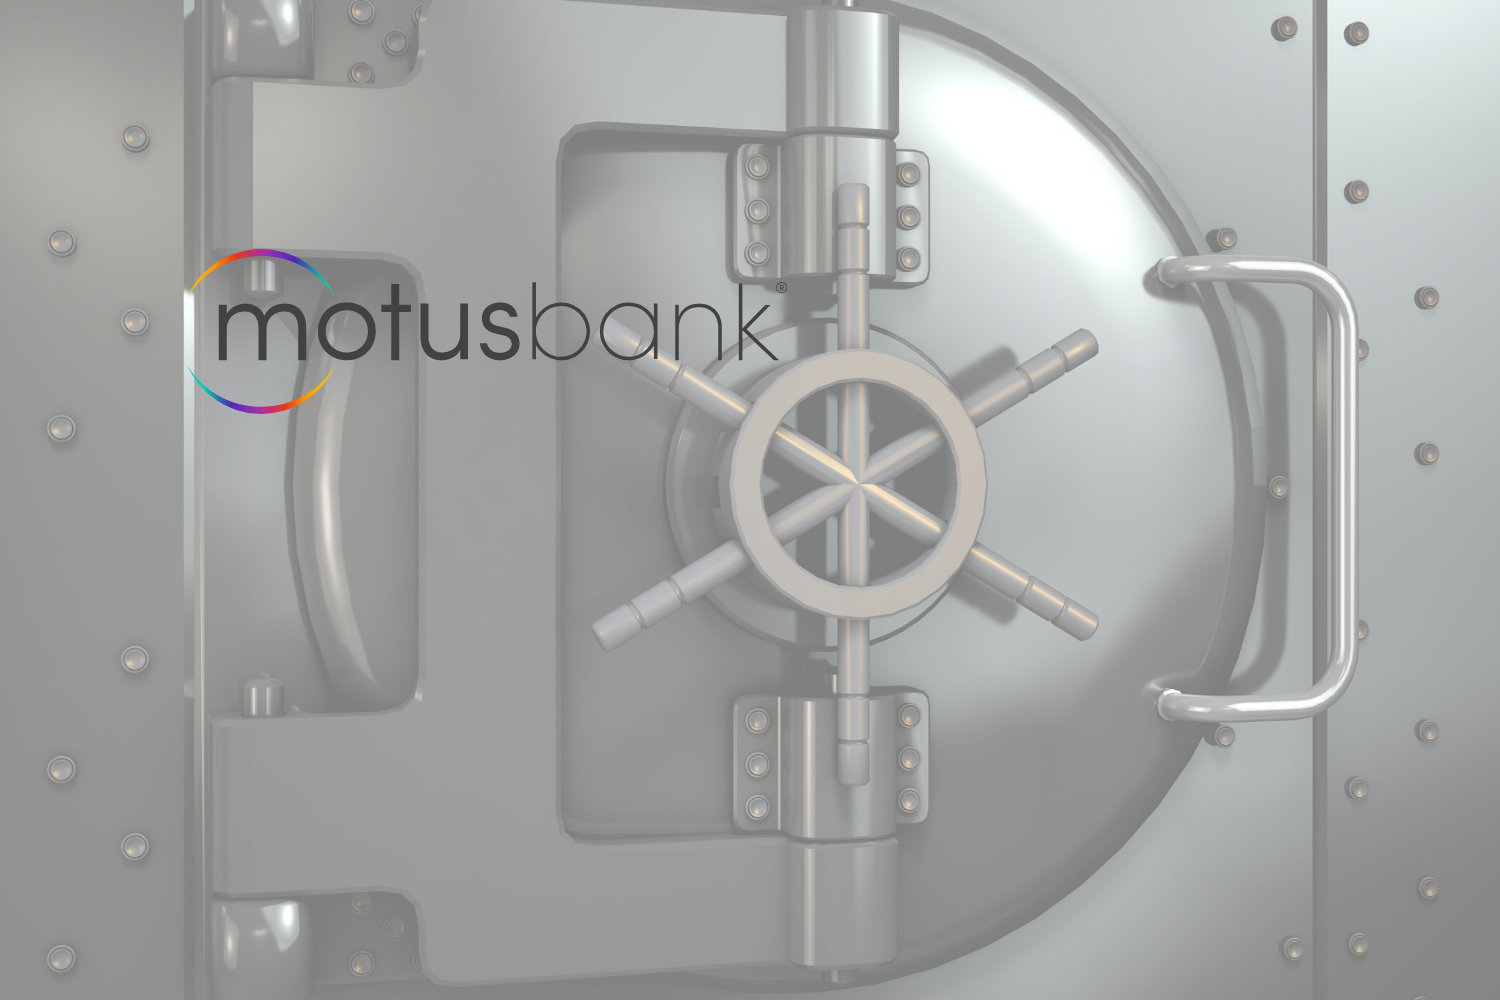 Motusbank